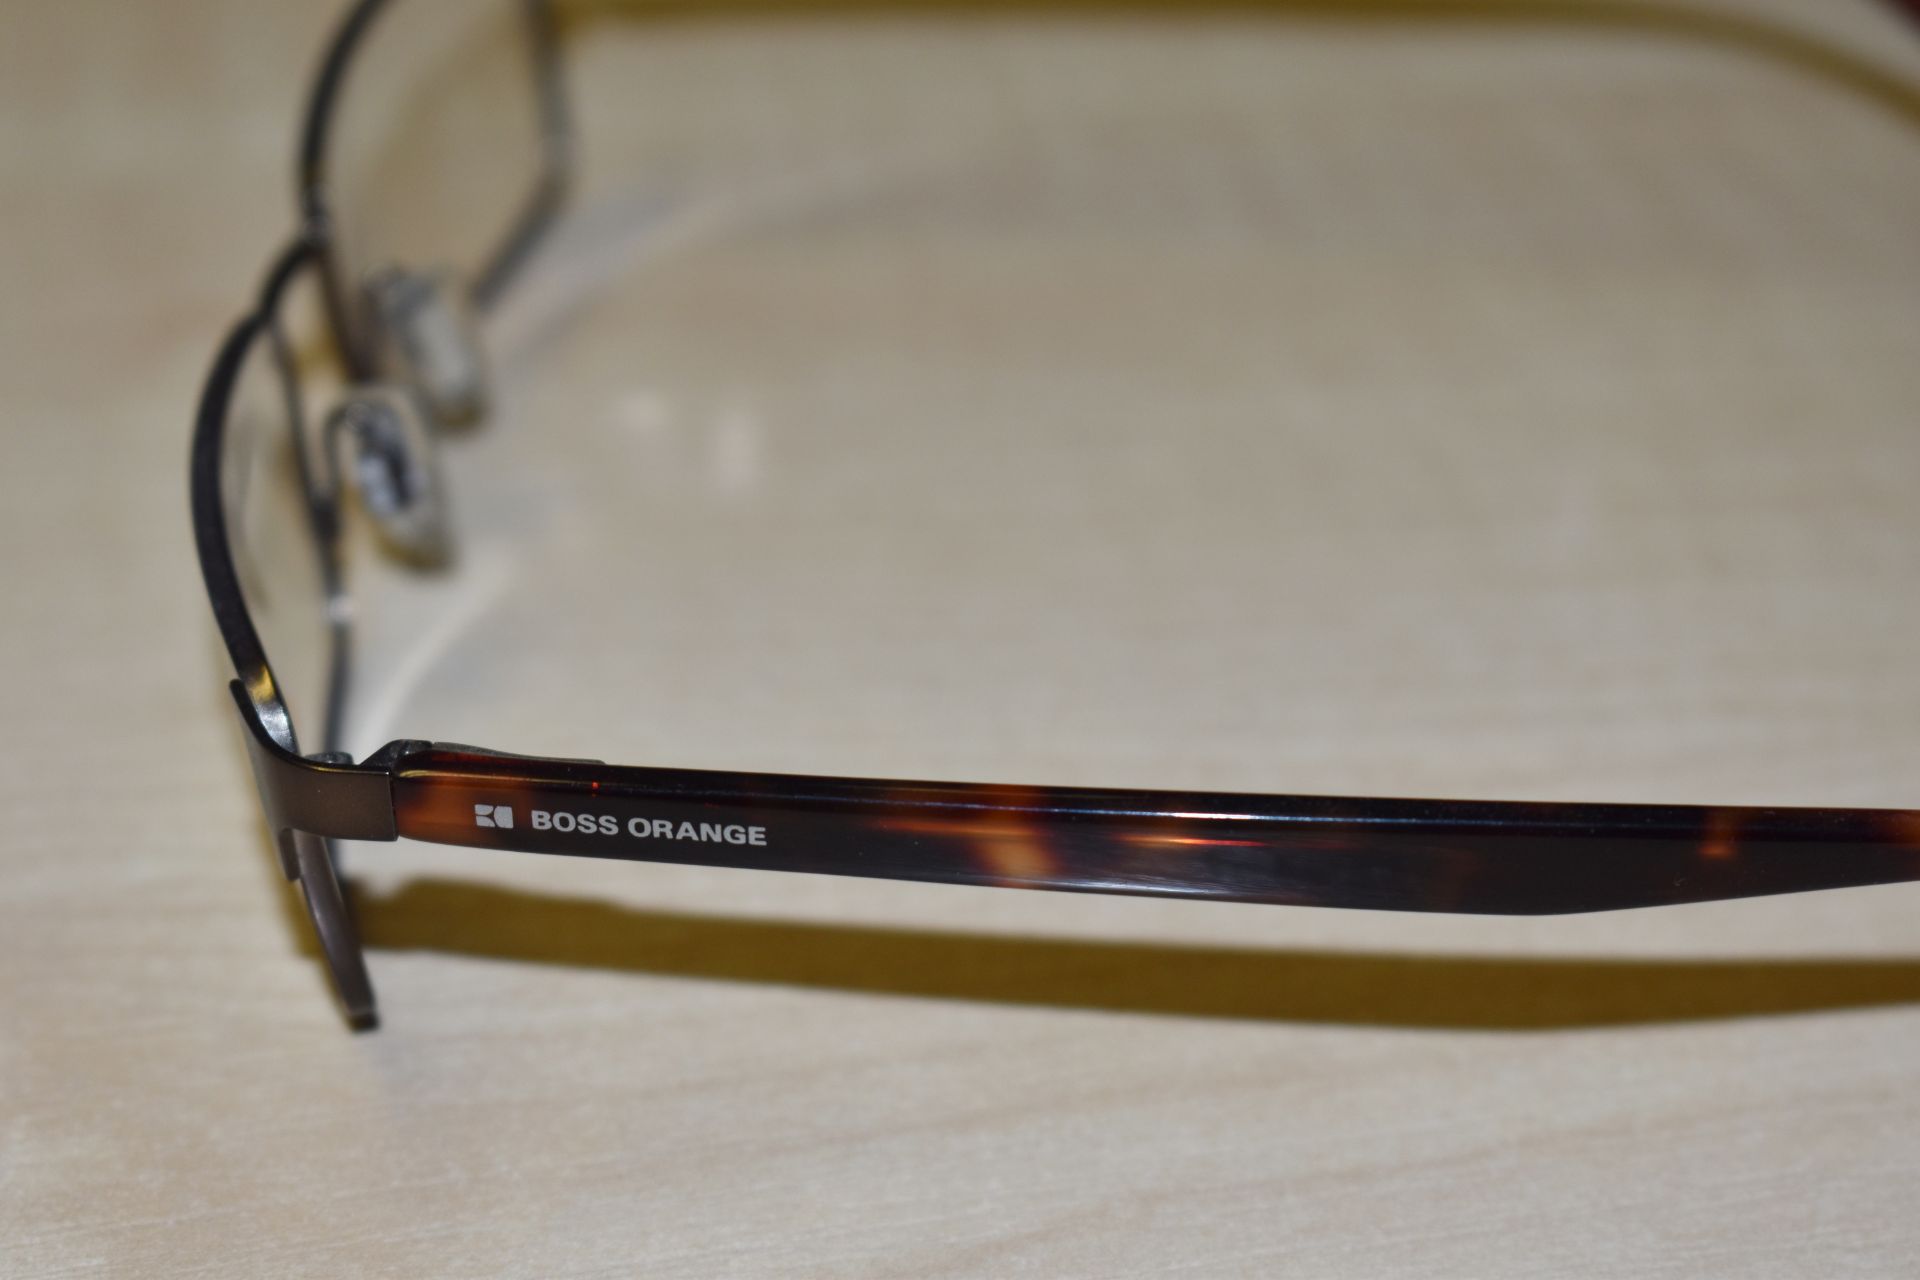 1 x Genuine BOSS ORANGE Spectacle Eye Glasses Frame - Ex Display Stock  - Ref: GTI193 - CL645 - - Image 9 of 11